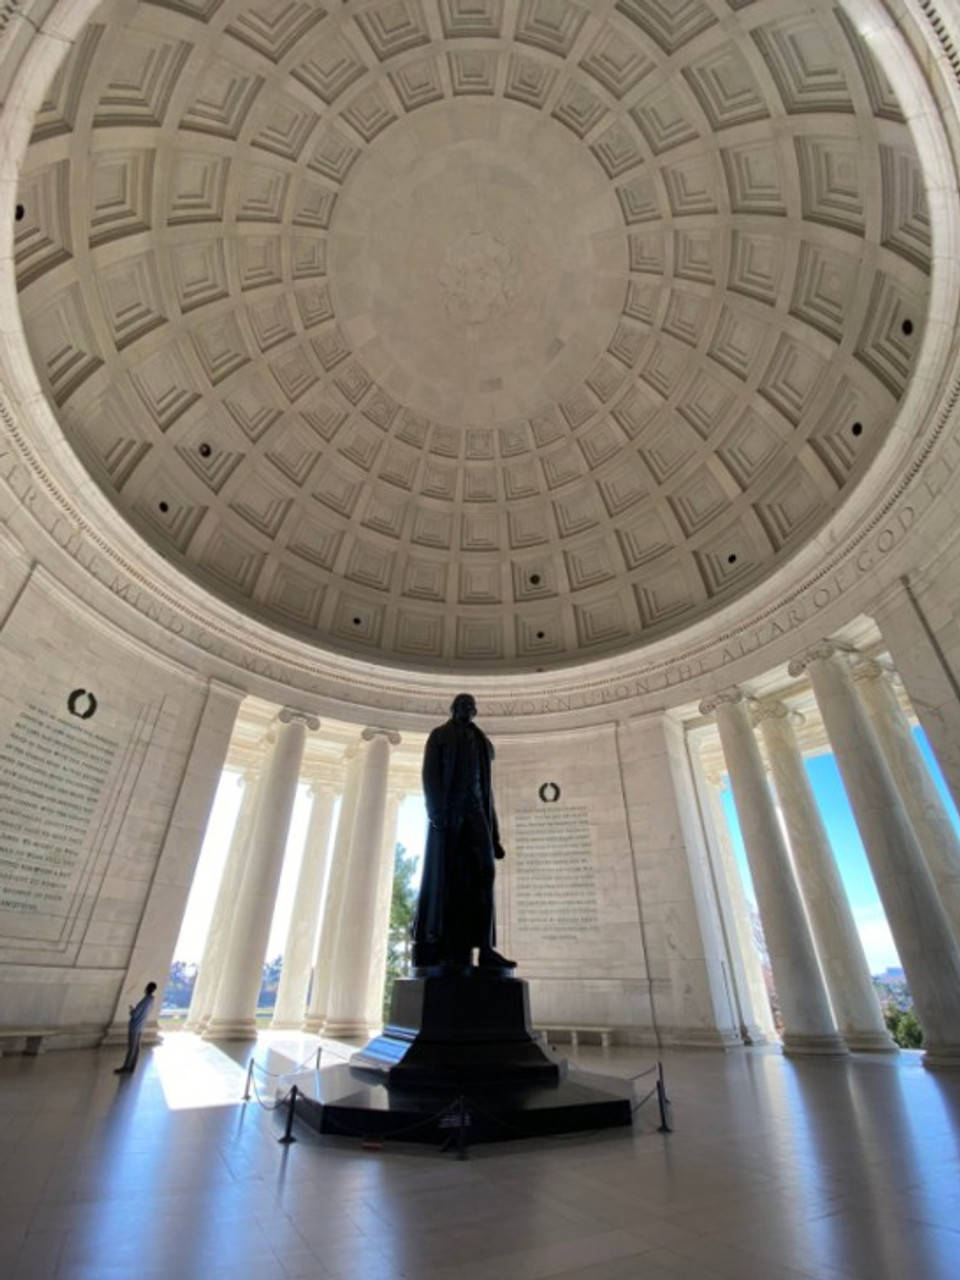 Jefferson Memorial Ceiling Picture